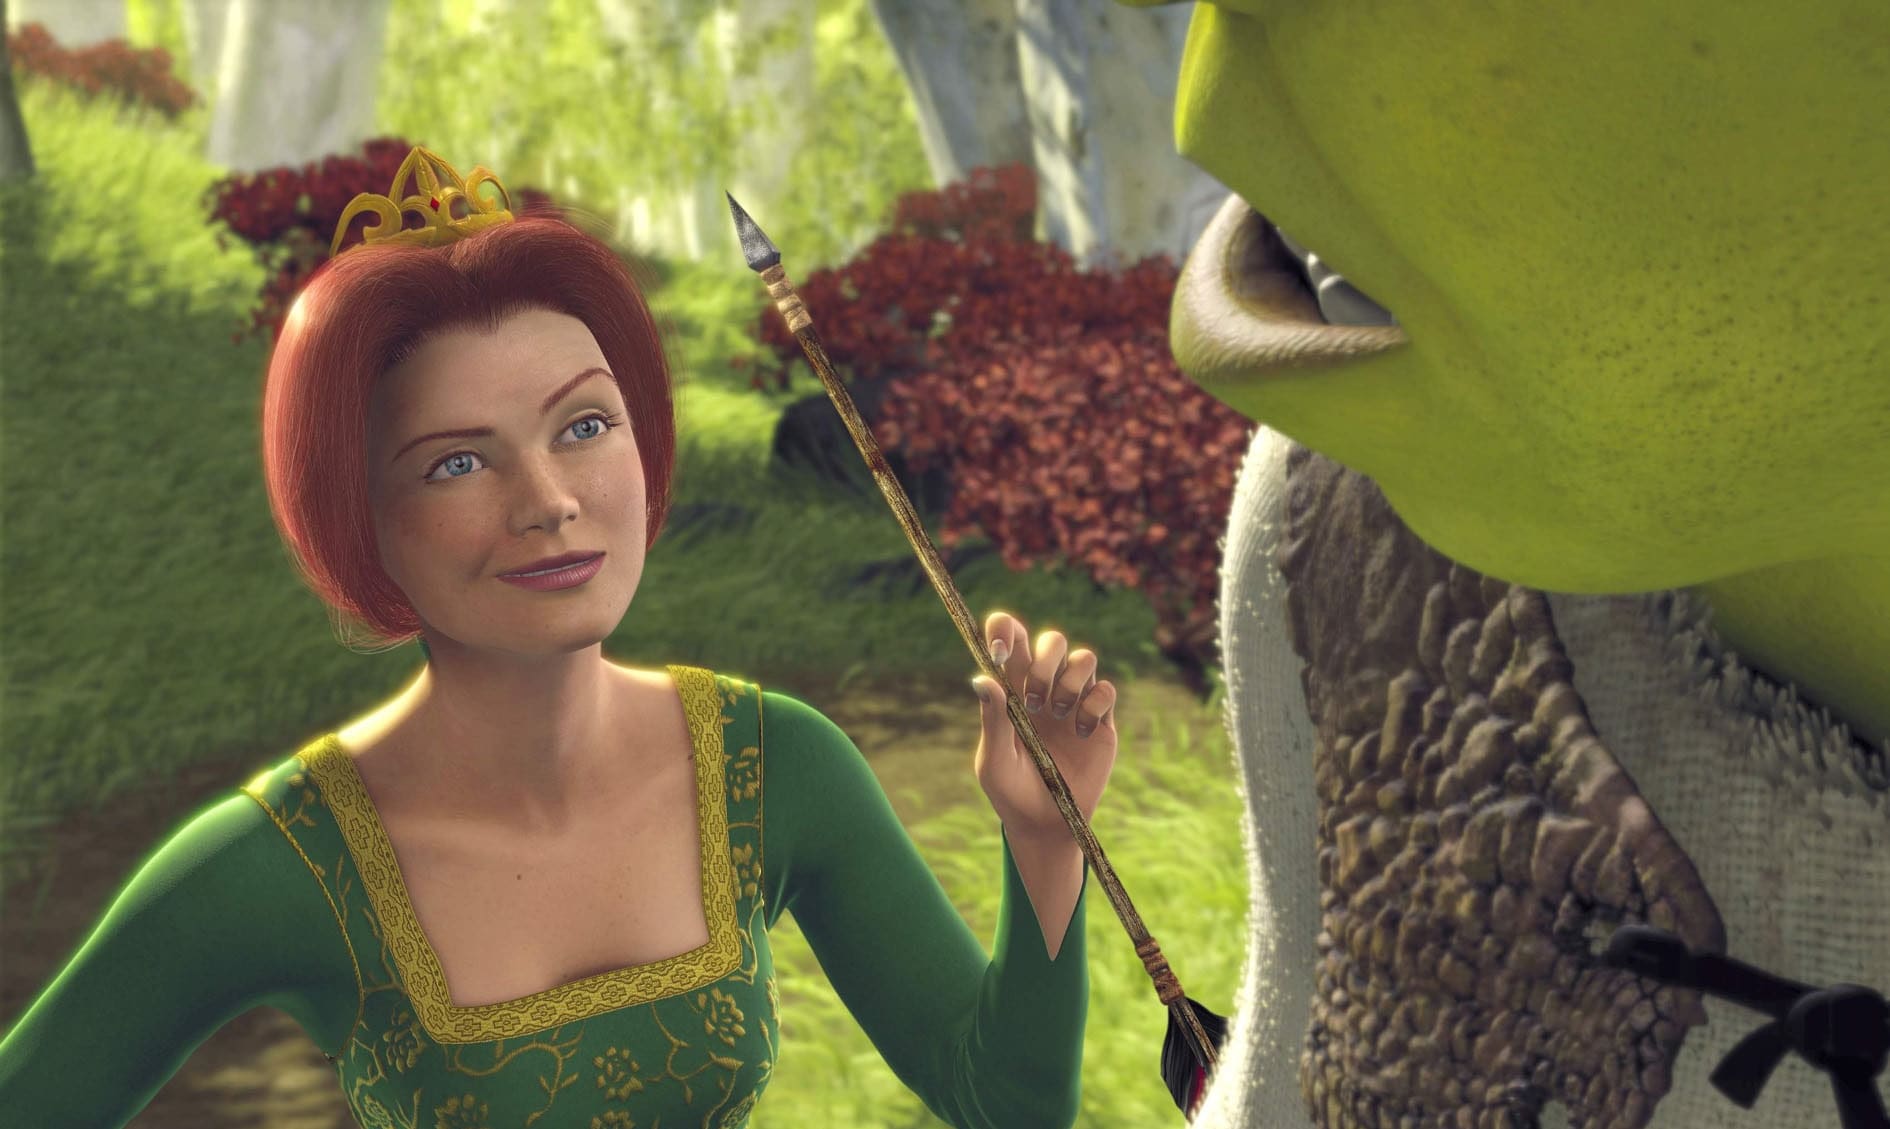 Cameron Diaz voices Princess Fiona in Shrek